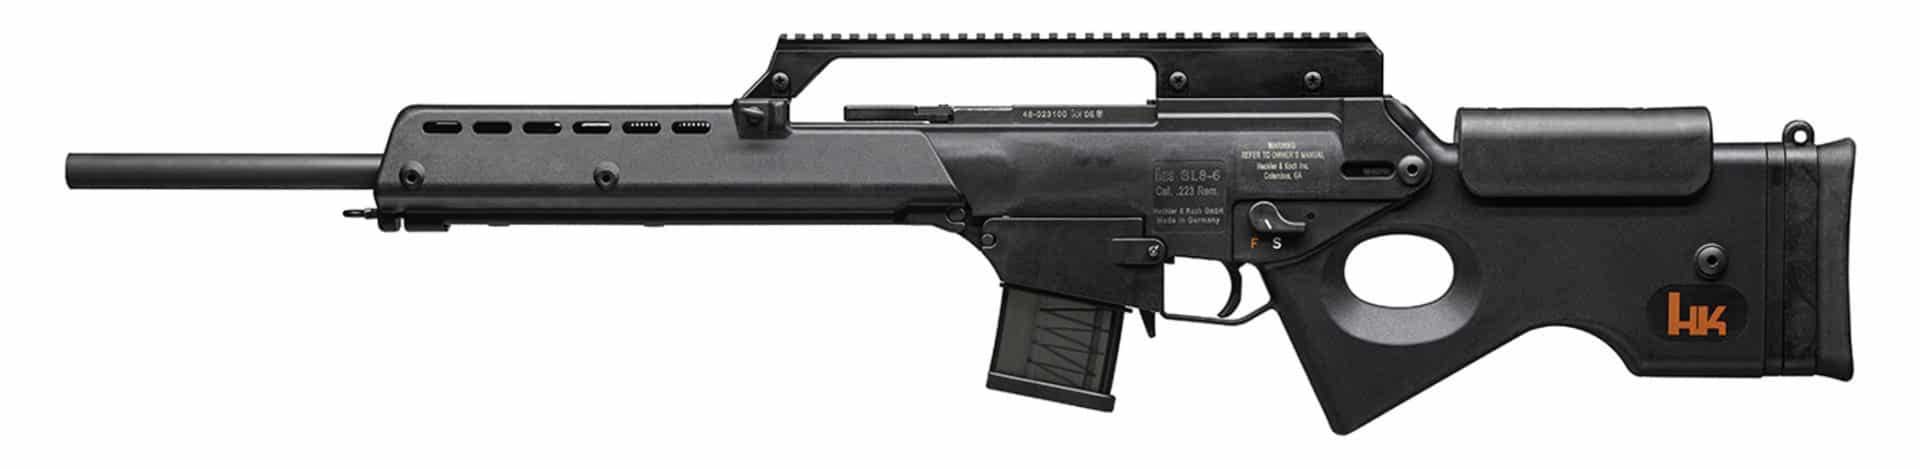 H&K SL8-6 left-side full-length view on white background black rifle gun semi-automatic thumbhole stock